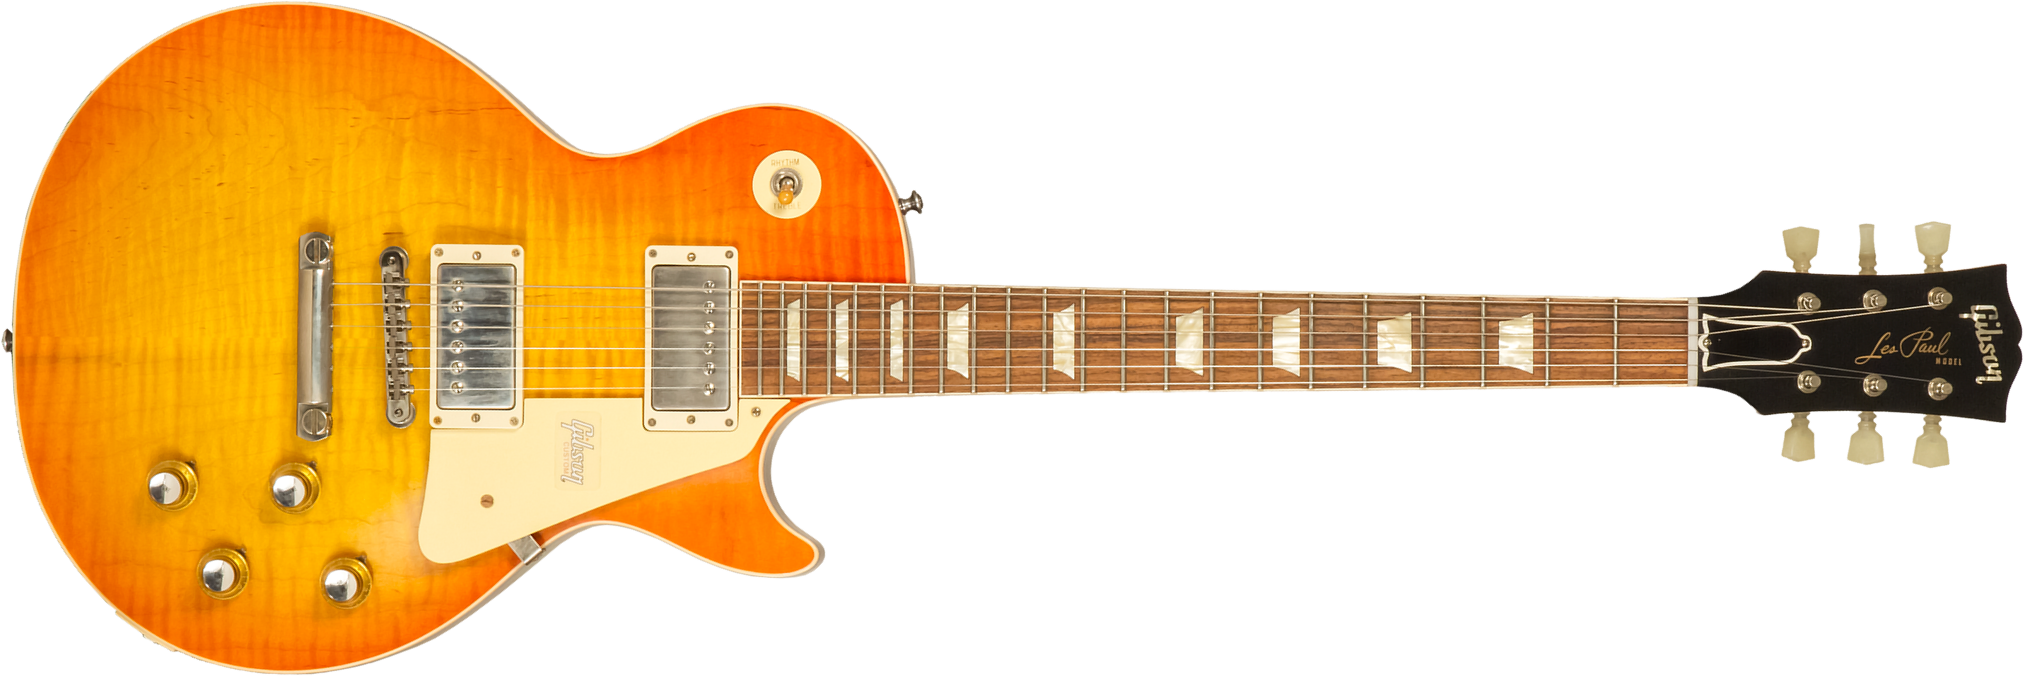 Gibson Custom Shop Les Paul Standard 1960 V2 60th Anniversary 2h Ht Rw #0600 - Vos Orange Lemon Fade - Single cut electric guitar - Main picture